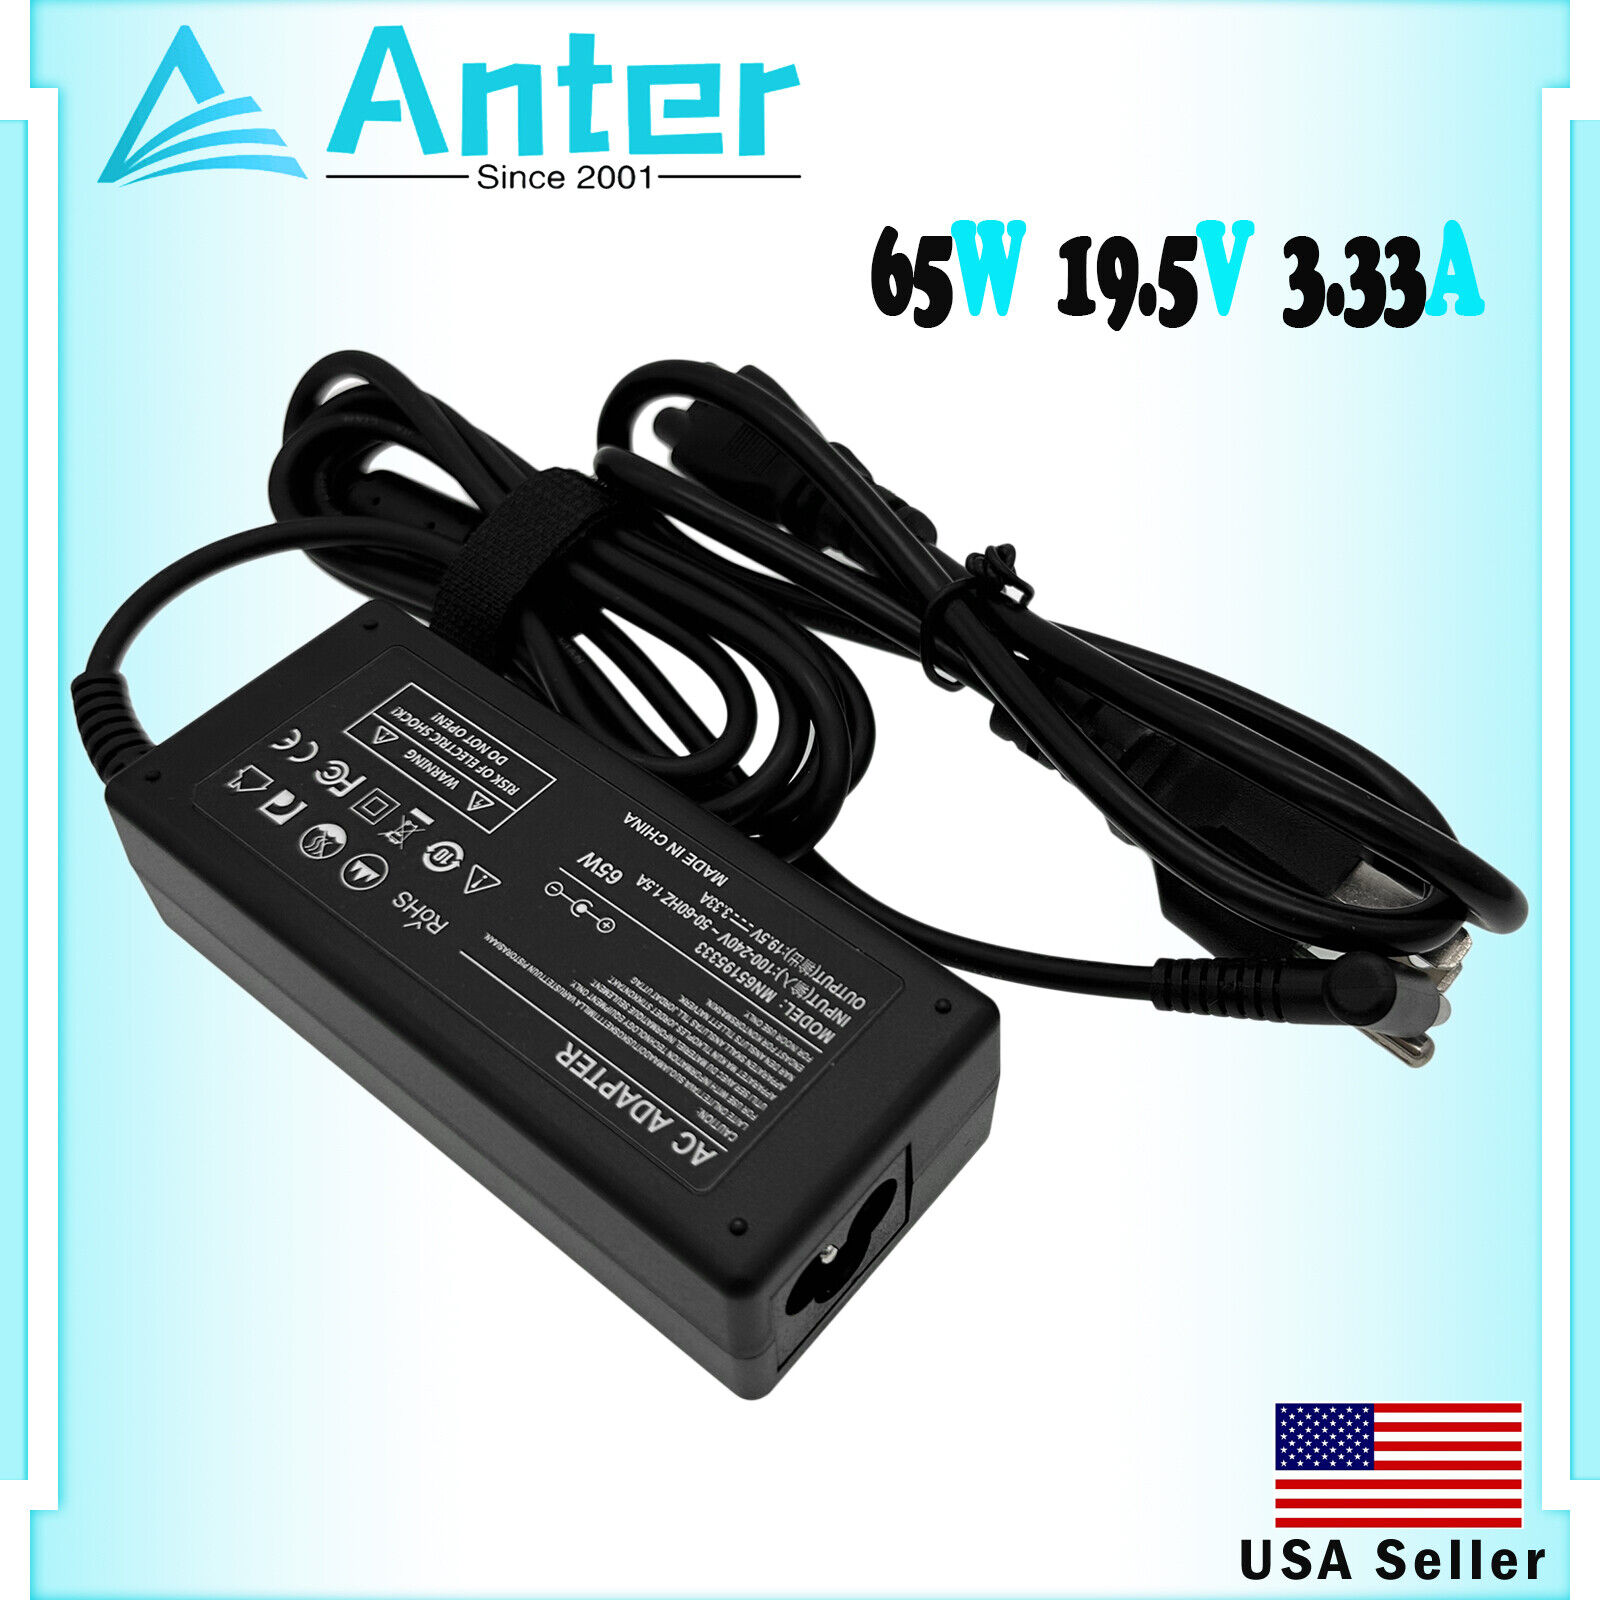 Charger AC Adapter For HP L7010t L7014 L7014t L7016t Retail Touch Monitor Power